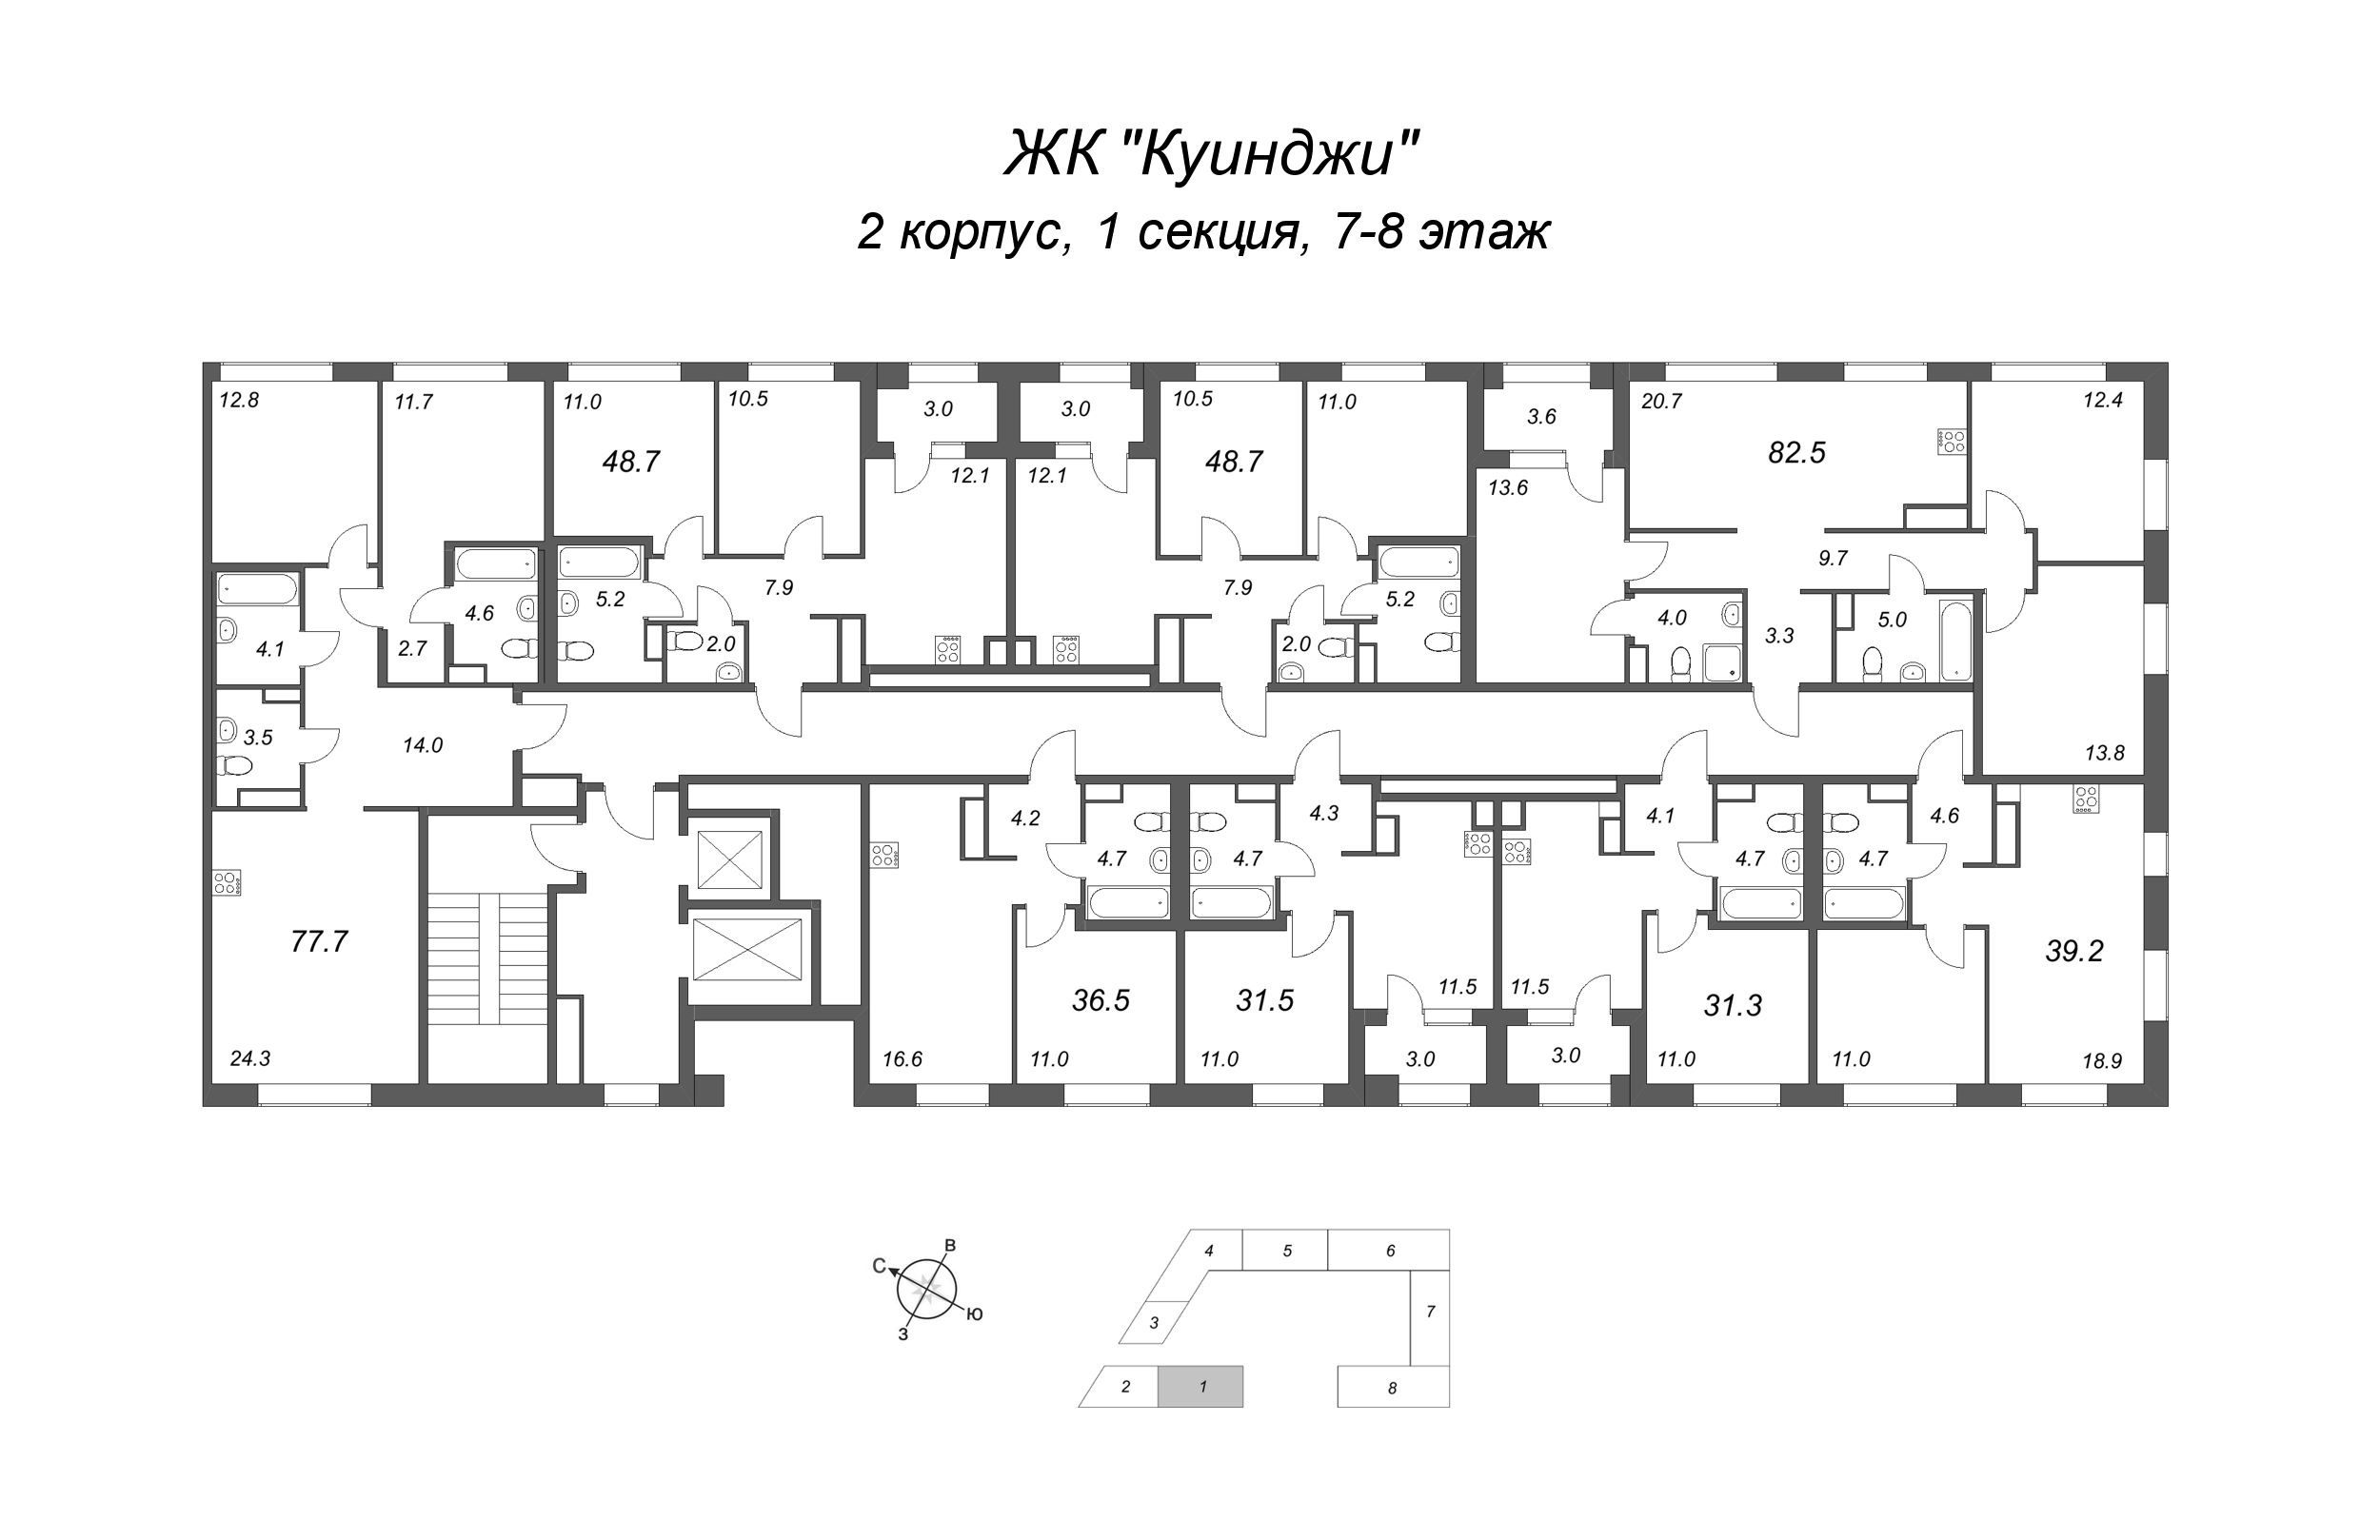 3-комнатная (Евро) квартира, 77.7 м² - планировка этажа